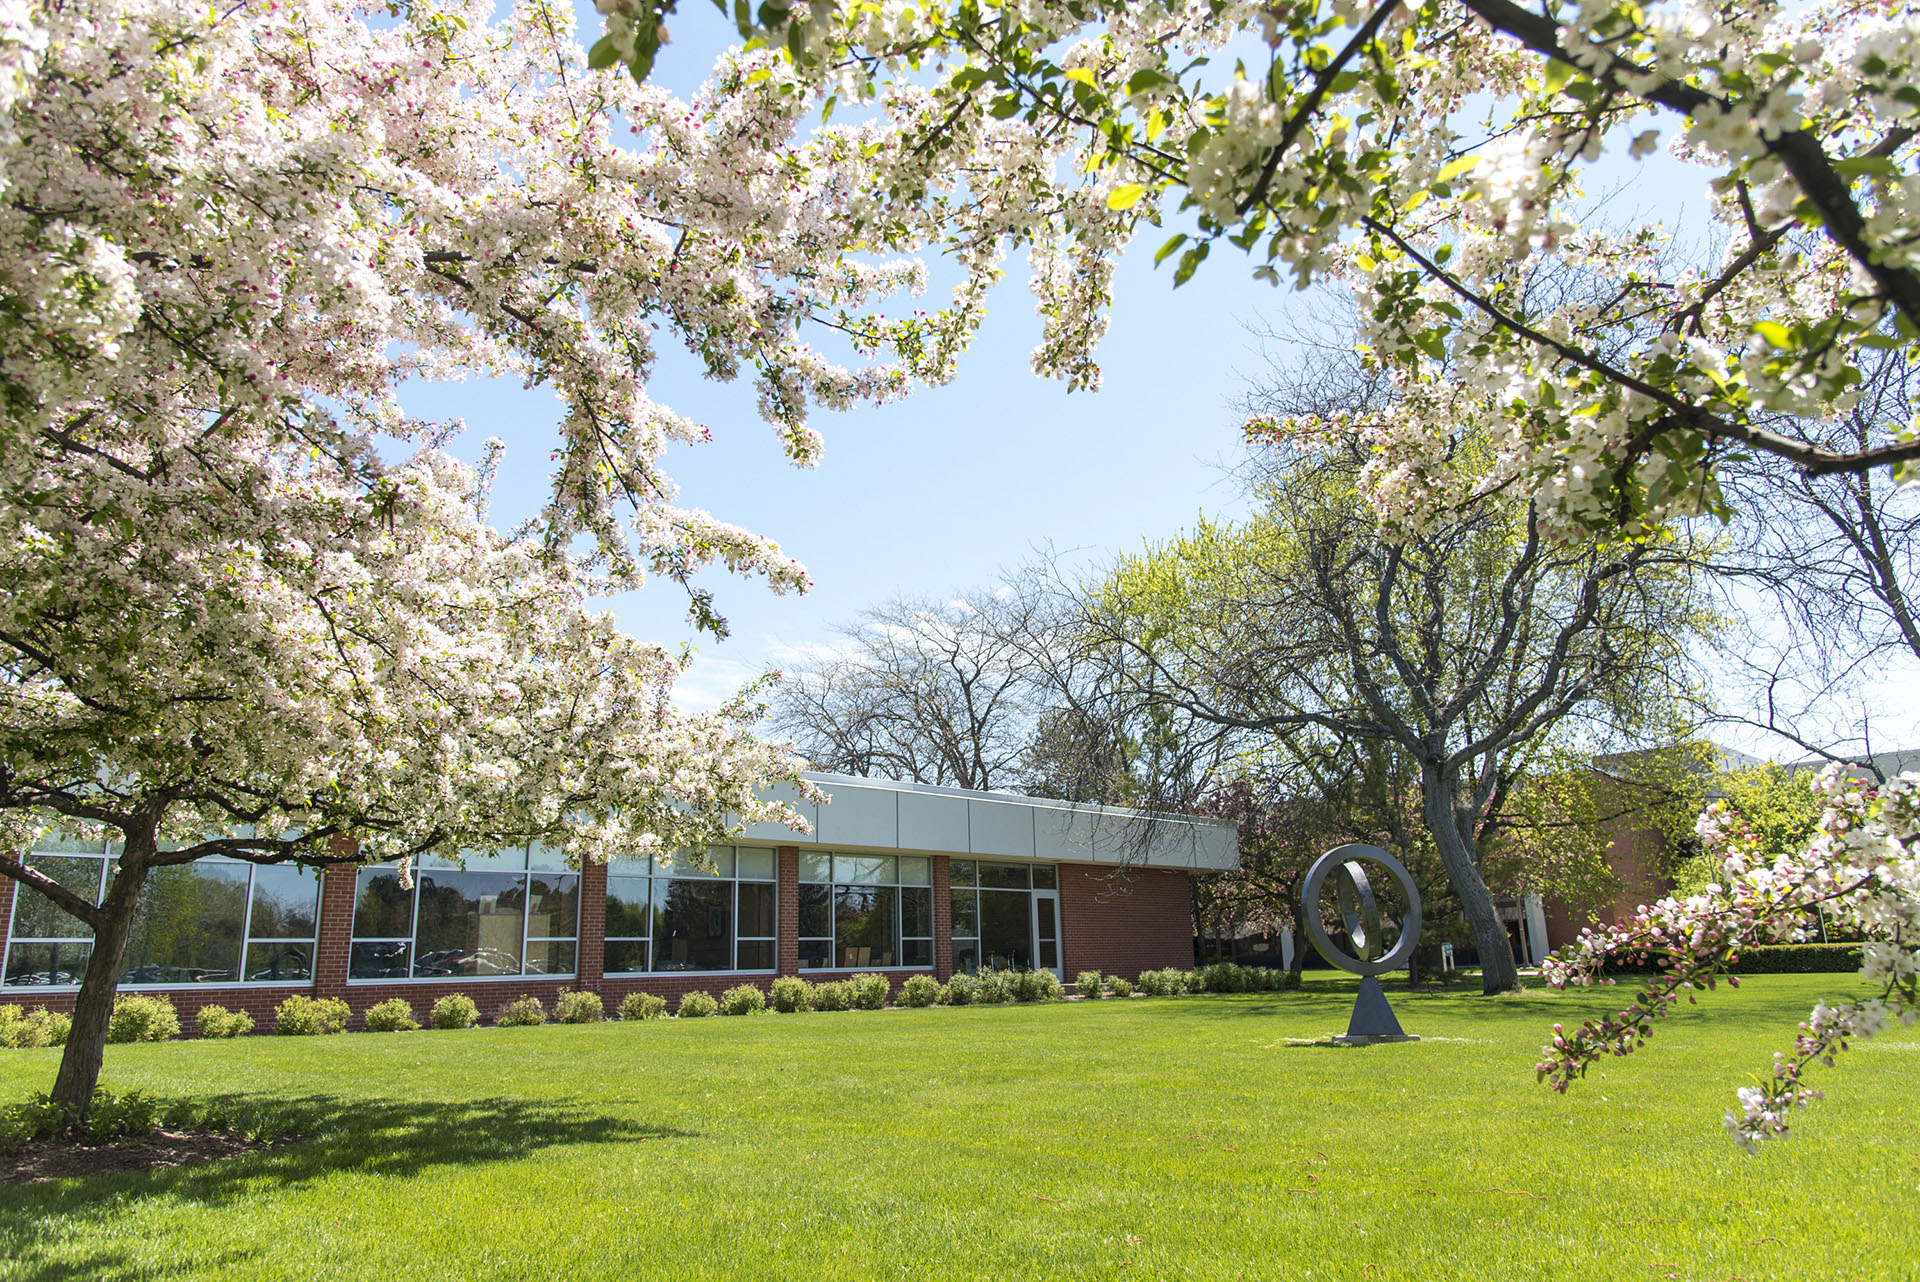 Main Campus in spring